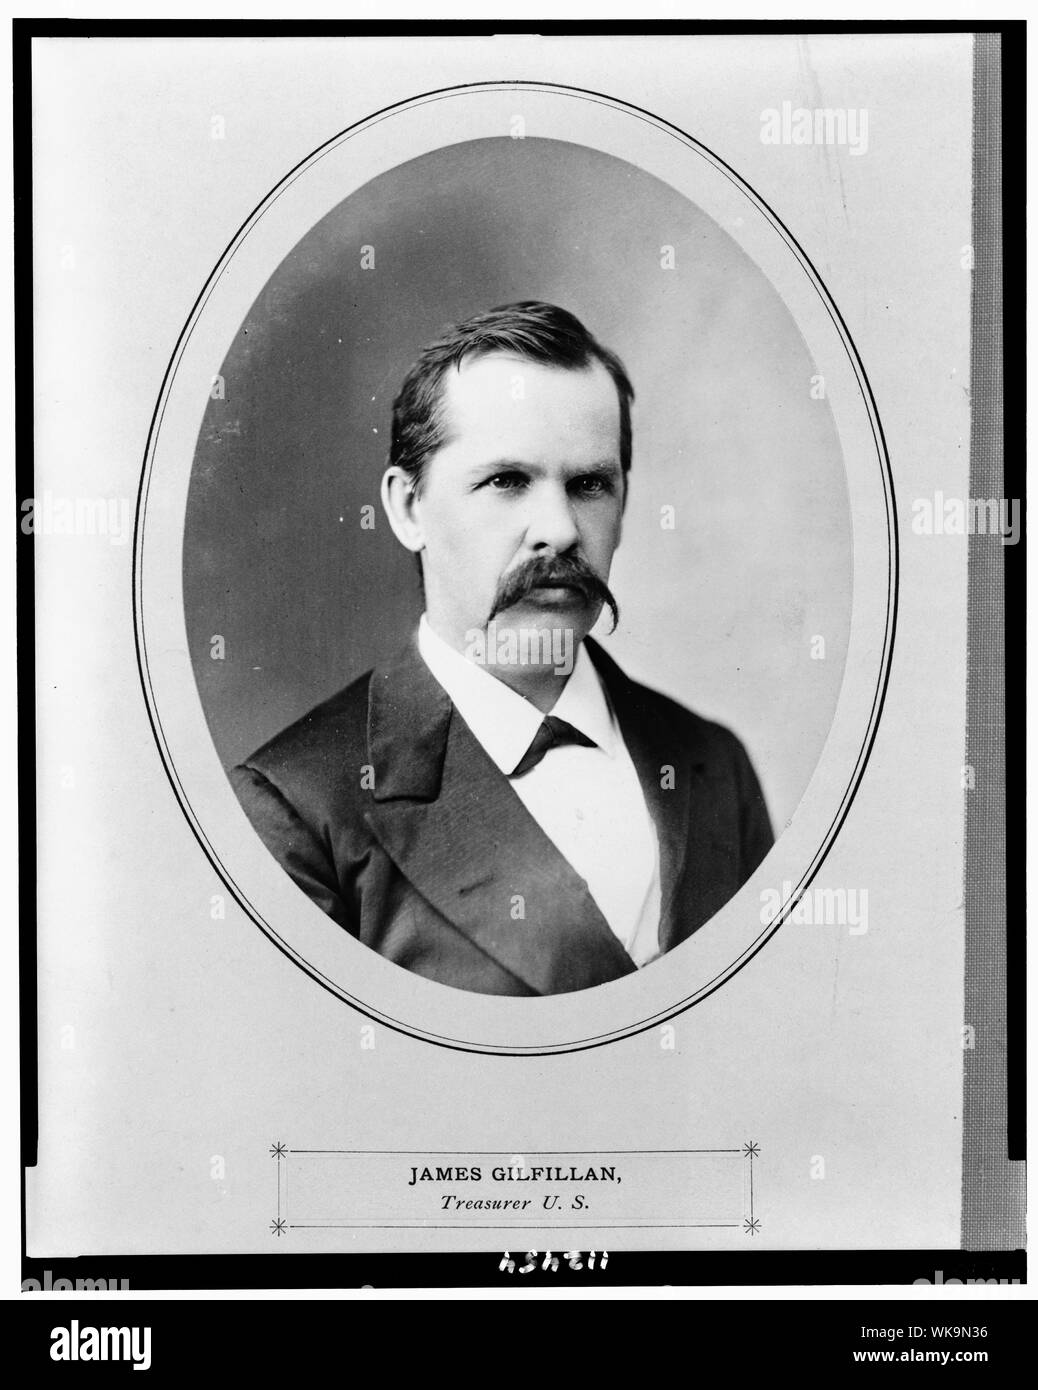 James Gilfillan, treasurer U.S Stock Photo - Alamy